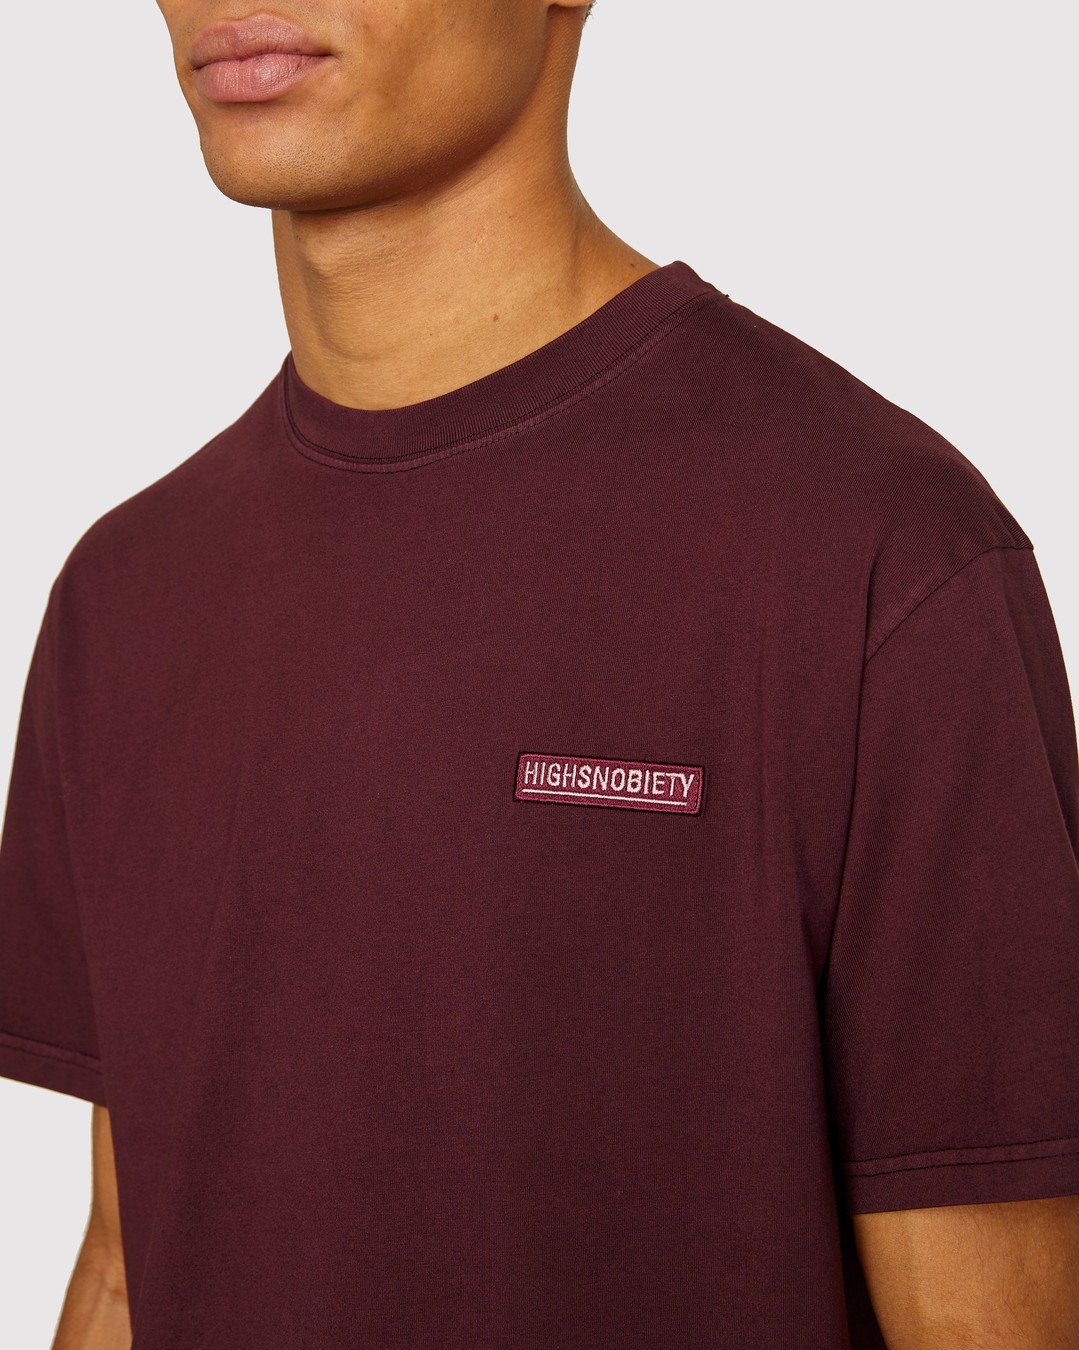 Highsnobiety – Staples T-Shirt Burgundy - T-shirts - Red - Image 5